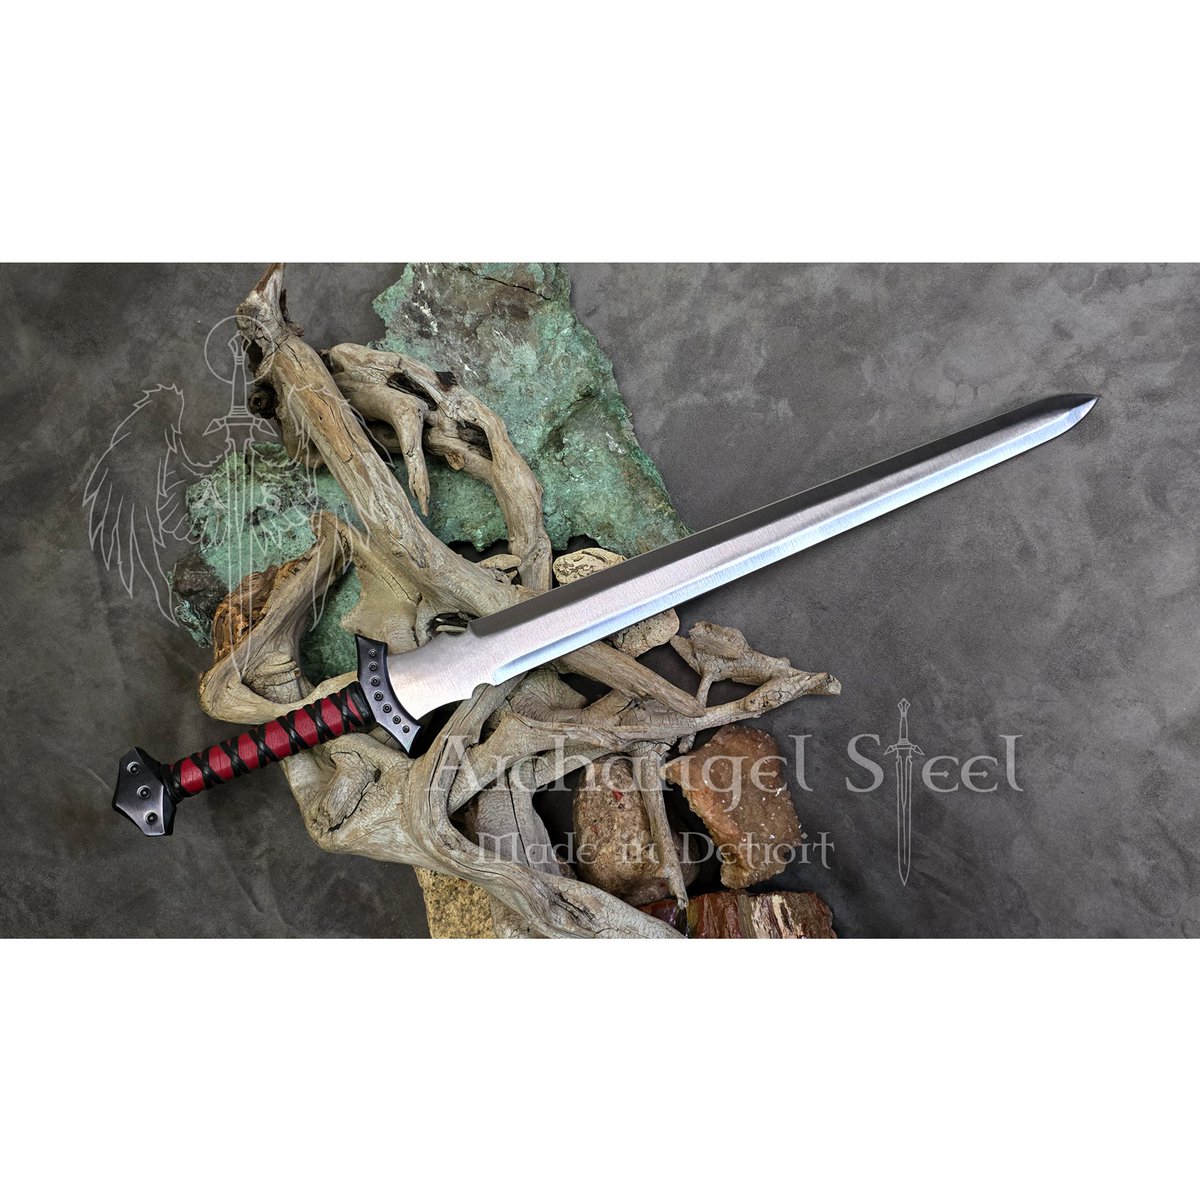 Viking Sword in Red and Black Leather Handle Wrap #vikings #sword #blade #swordsmith #bladesmith #vikingstyle #Viking #michiganartist #madeinamerica #detroit #puremichigan